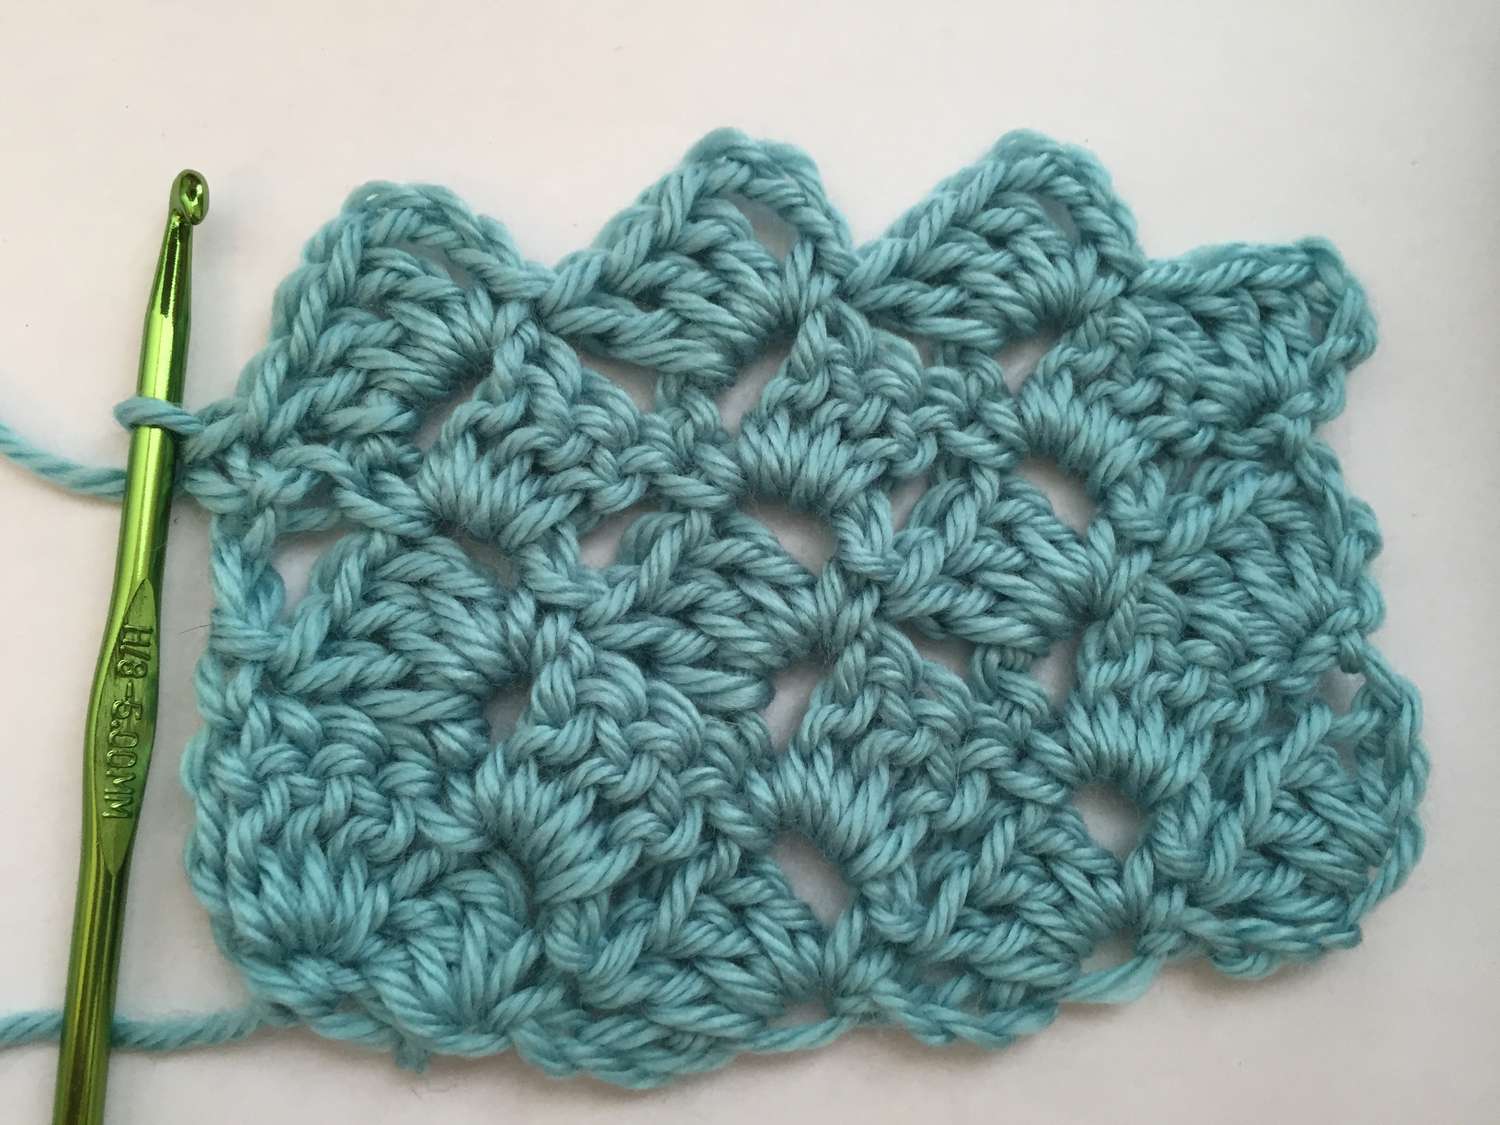 Crochet brick stitch